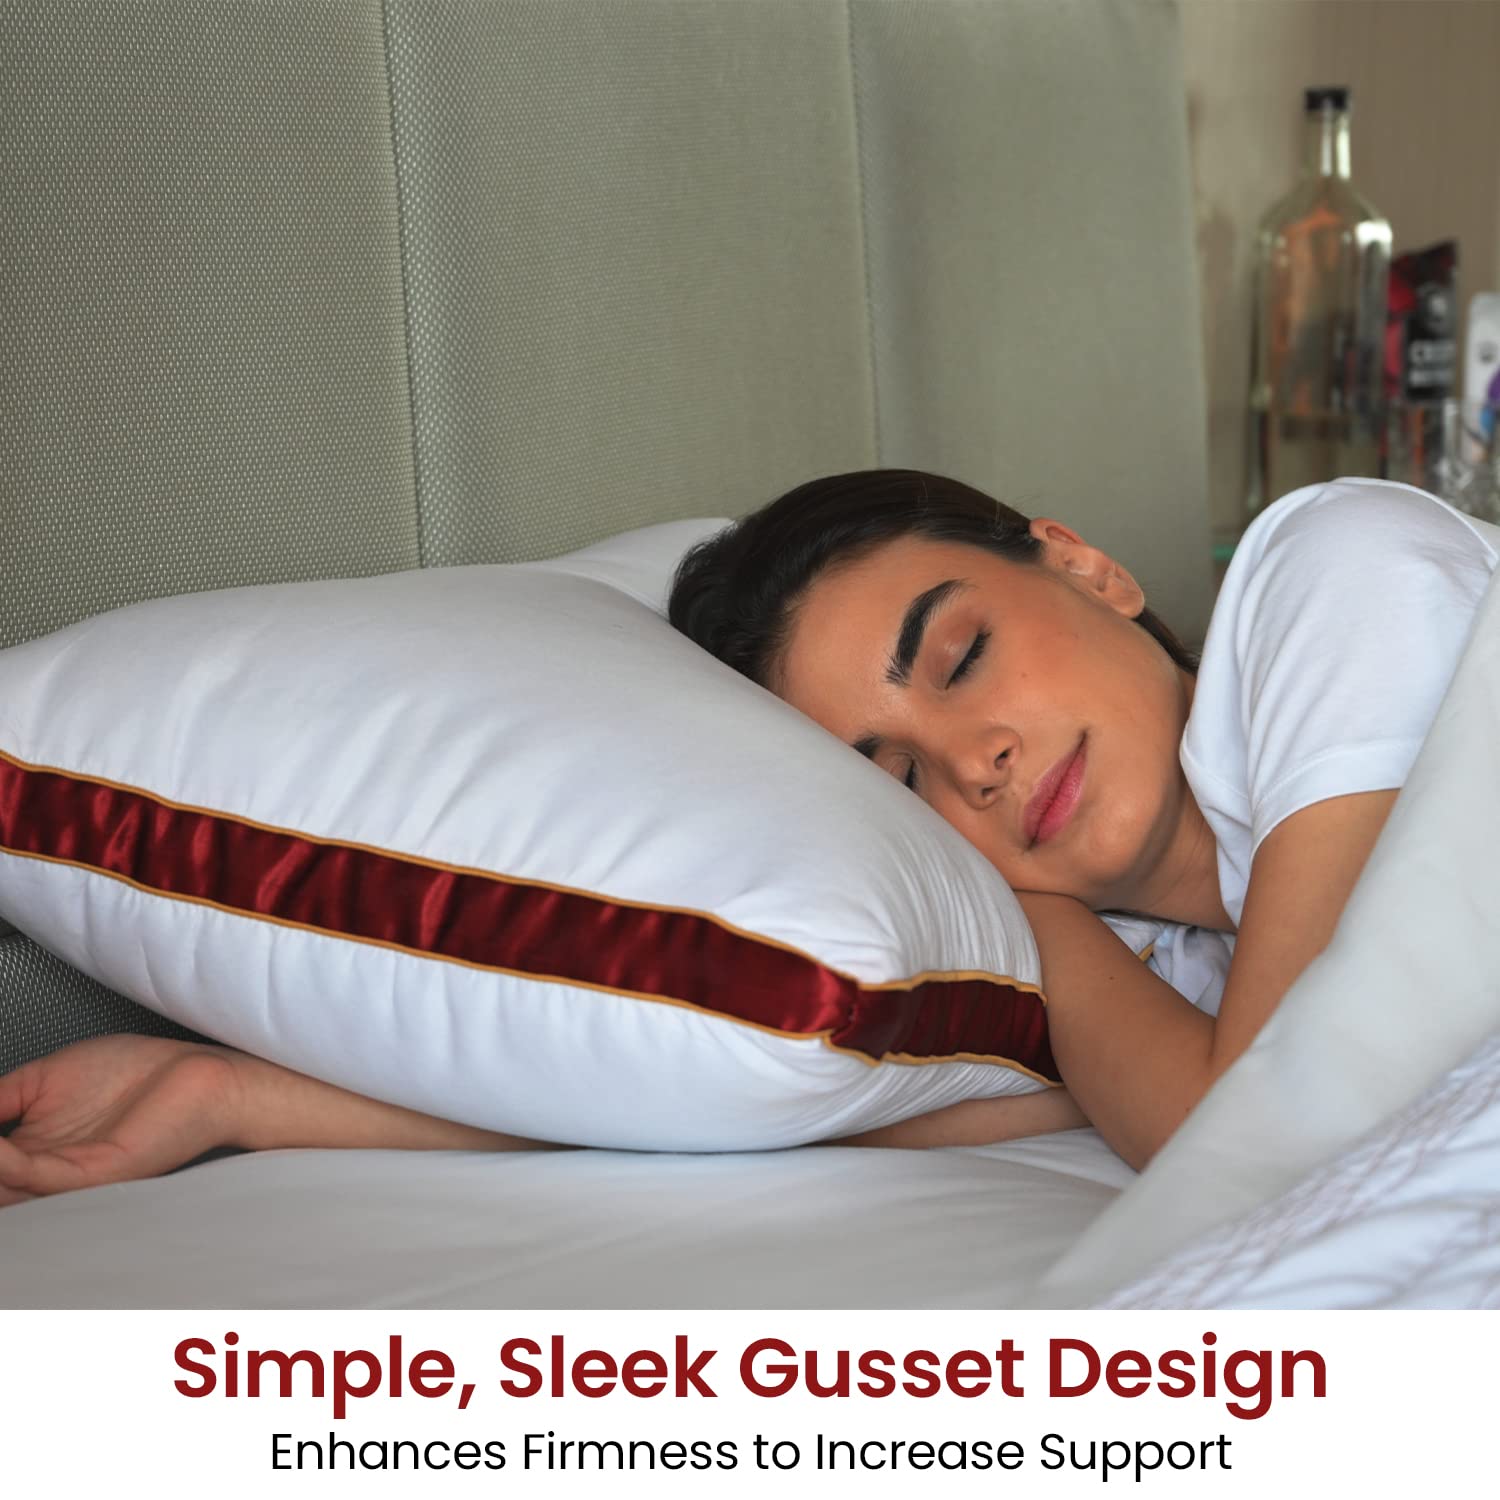 Super-Soft & Fluffy Microfiber Sleeping Pillow with Strip (Hotel Pillow)